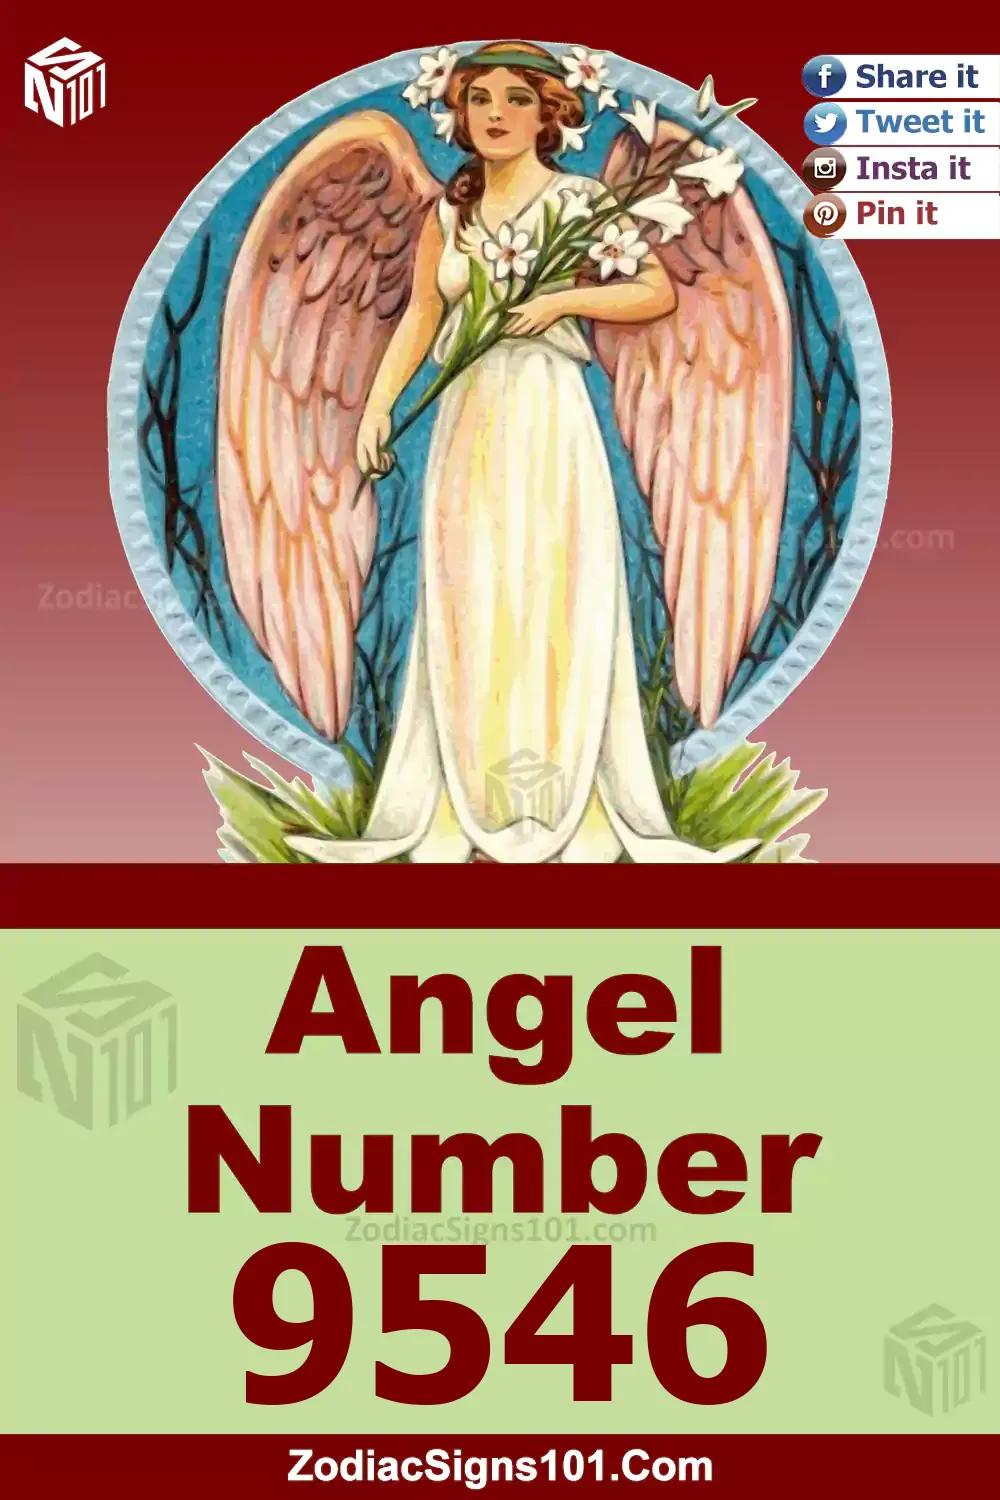 9546-Angel-Number-Meaning.jpg